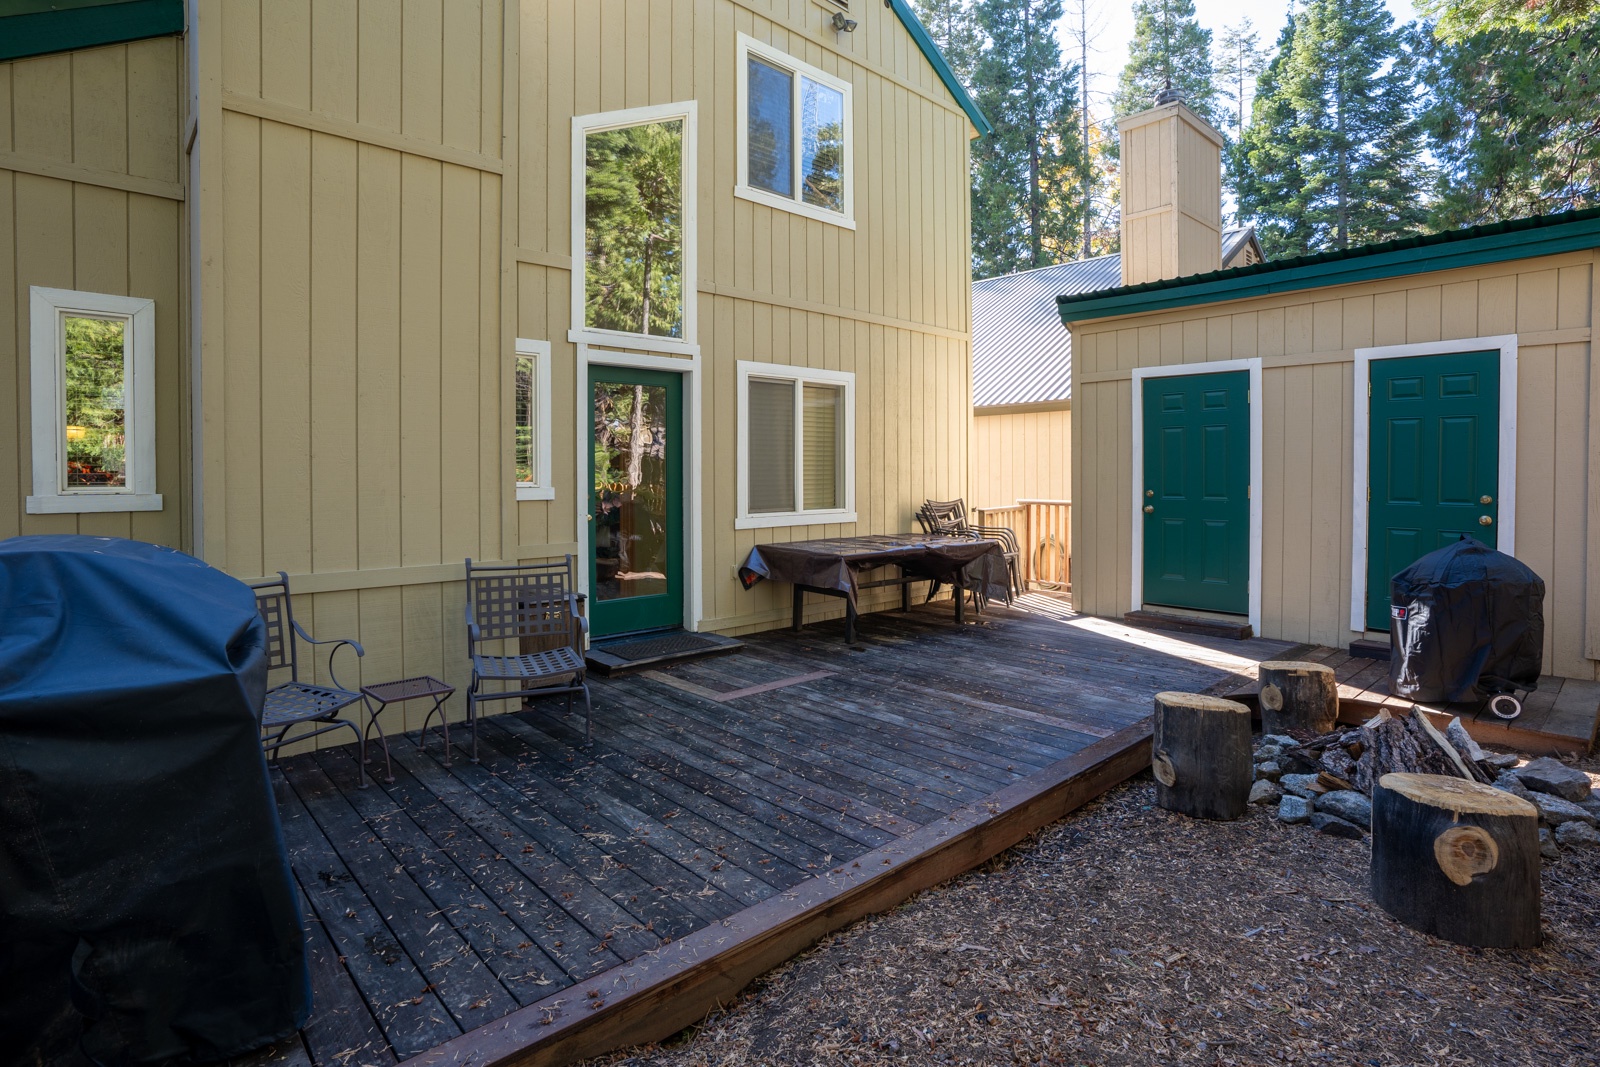 Step outside into the spacious, shady back yard & enjoy the fresh air